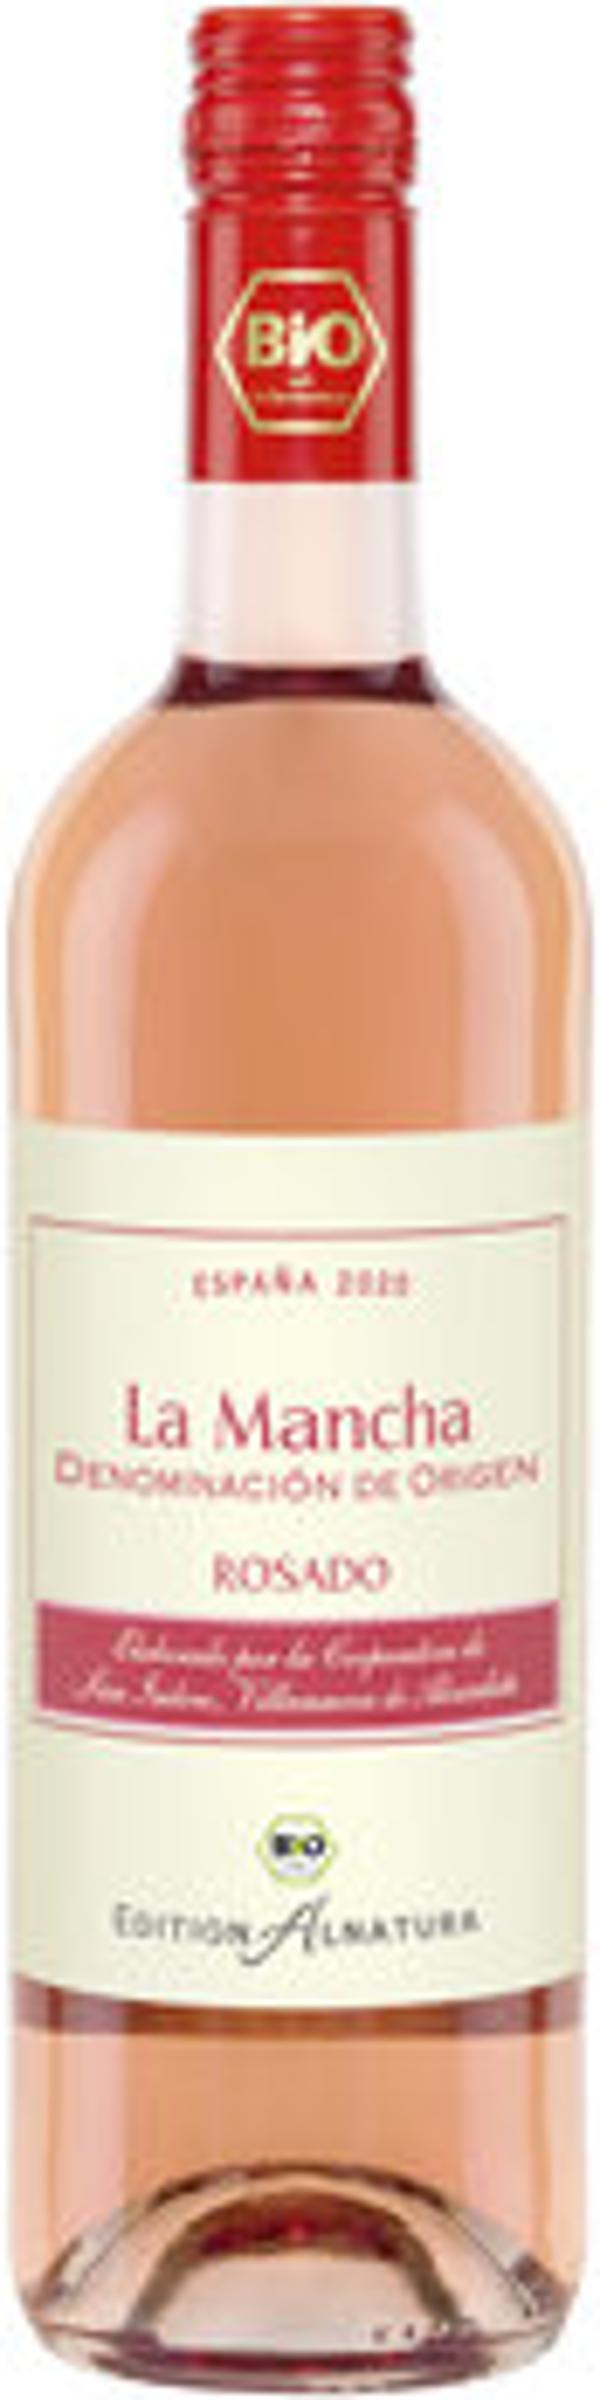 Produktfoto zu La Mancha Rosado 0,75L